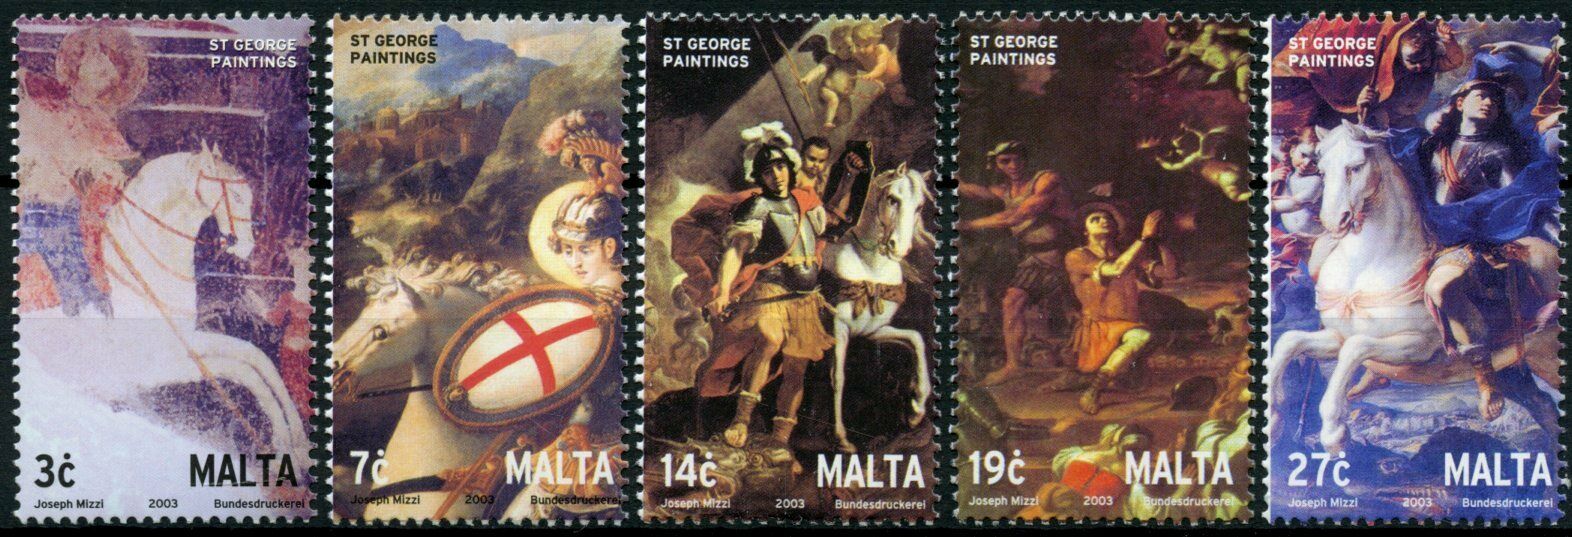 Malta Art Stamps 2003 MNH St George Paintings Saints Horses 5v Set